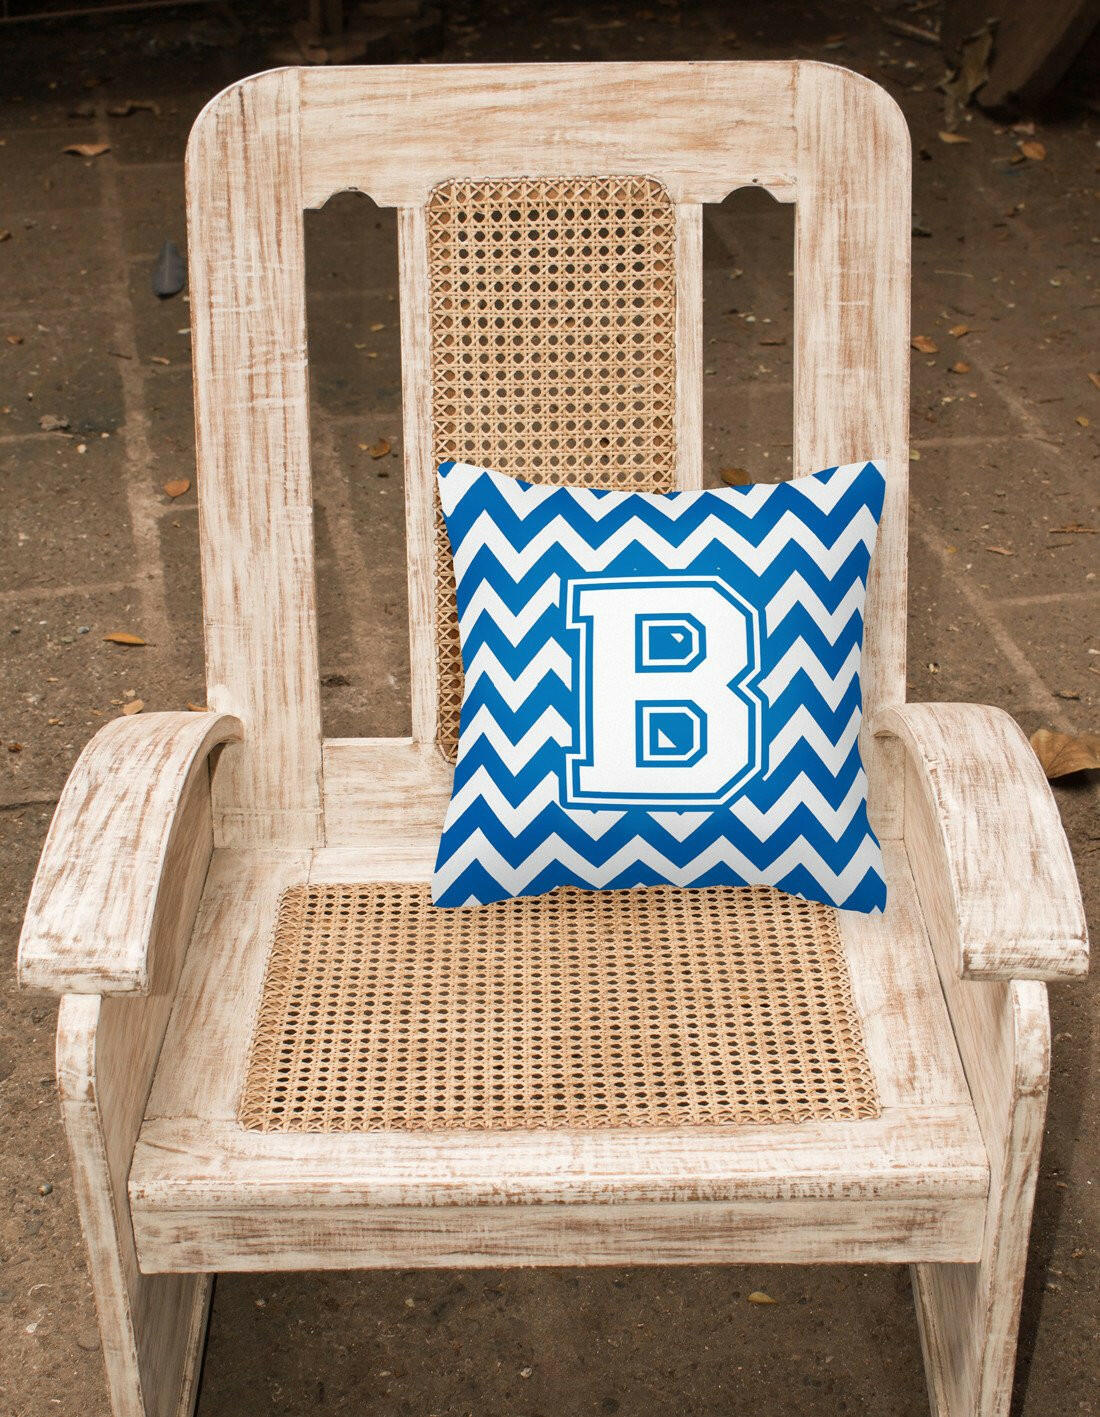 Letter B Chevron Blue and White Fabric Decorative Pillow CJ1045-BPW1414 - the-store.com